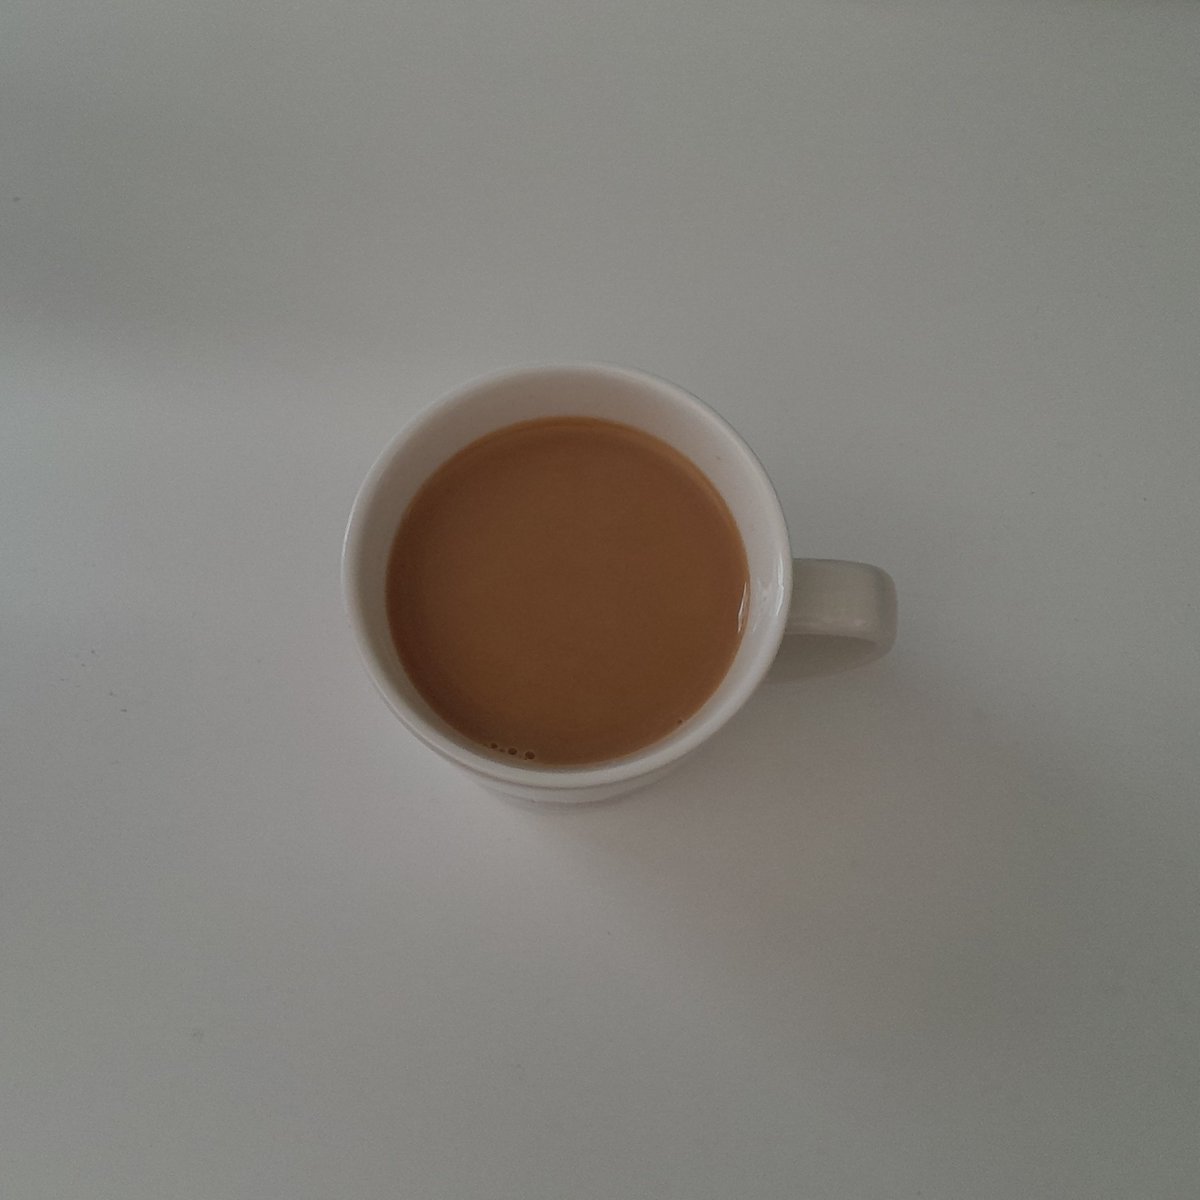 Stressed, tired and pissed off but coffee helps. Thank God It's Friday! ☕ #ThankGodItsFriday #TGIF #Friyay #roughweek #coffeeplease #ineedcoffee #coffee #kahvi #finland #april #huhtikuu #perjantai #Friday